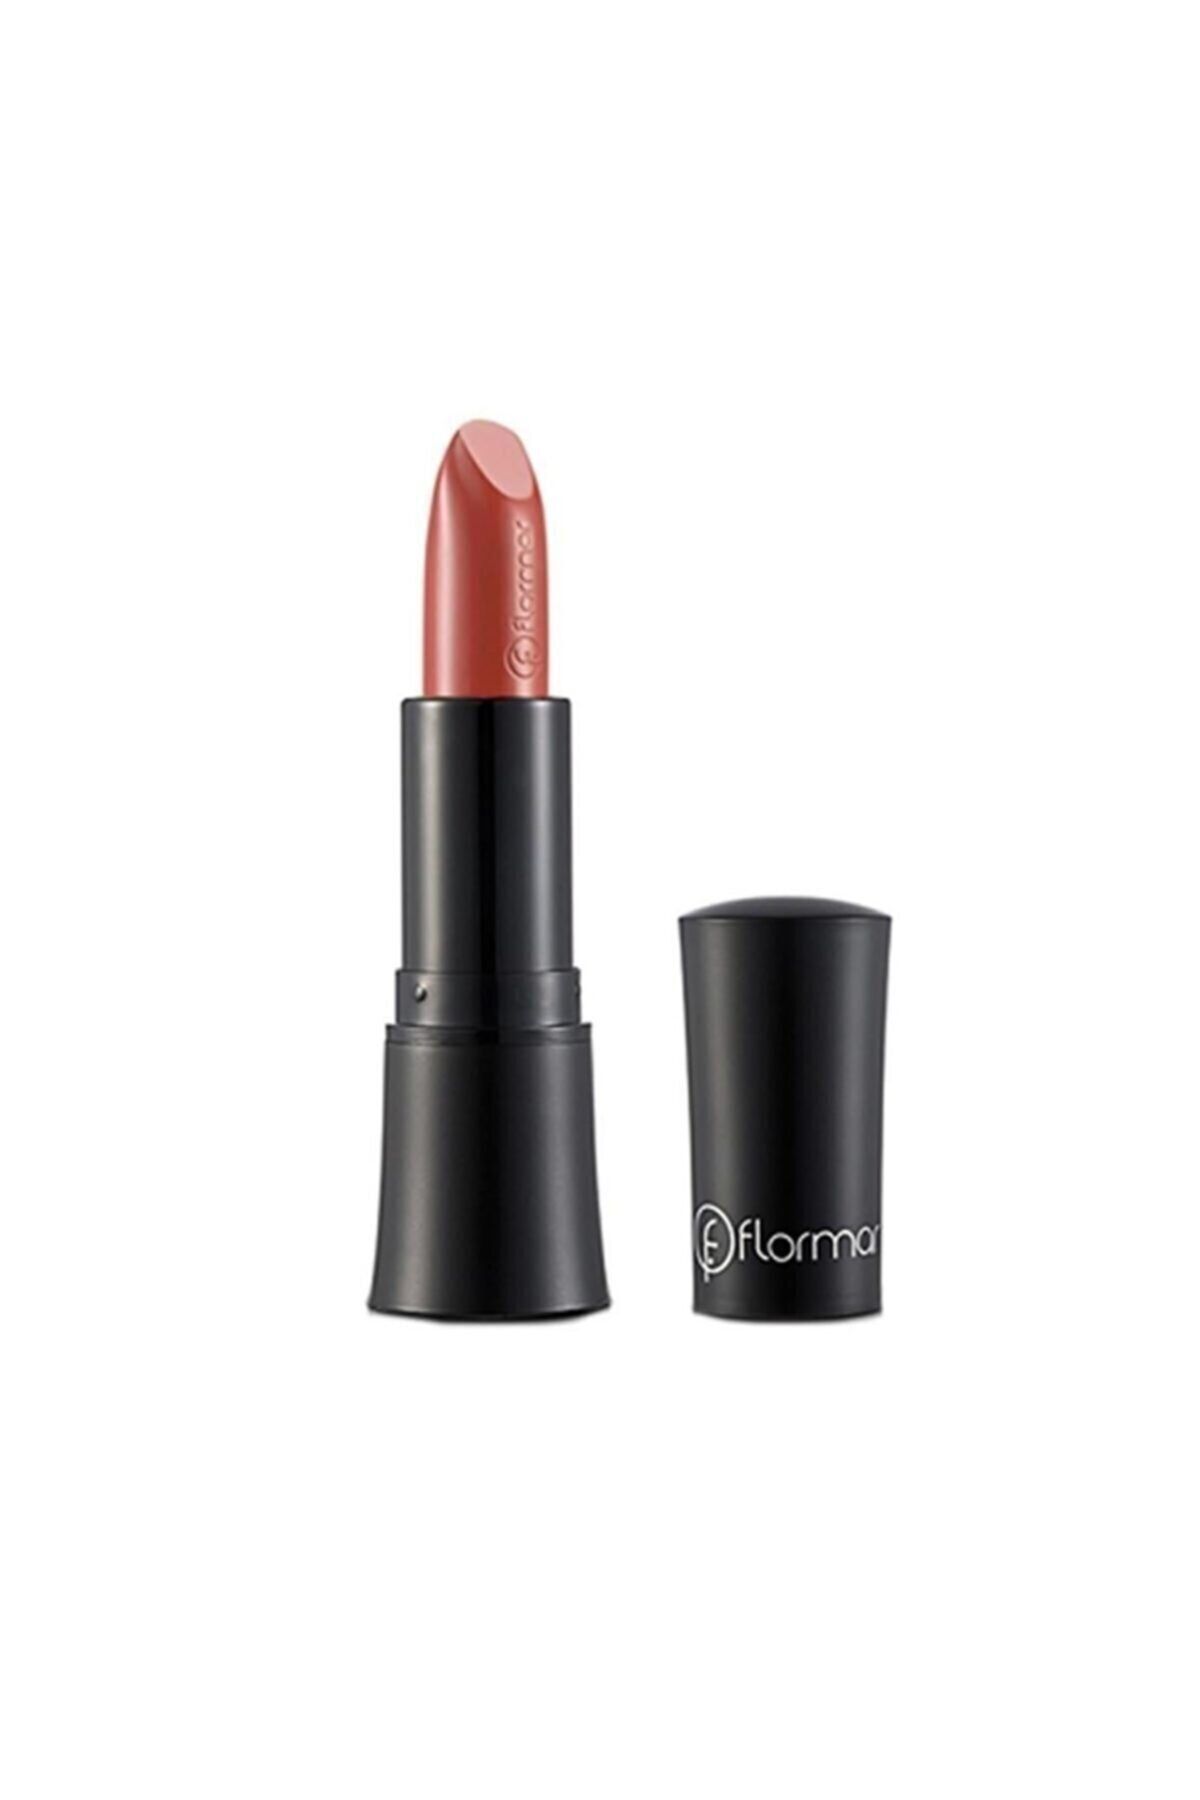 Flormar Ruj - Supermatte Lipstick 205 Peach Pastel 33000003-205